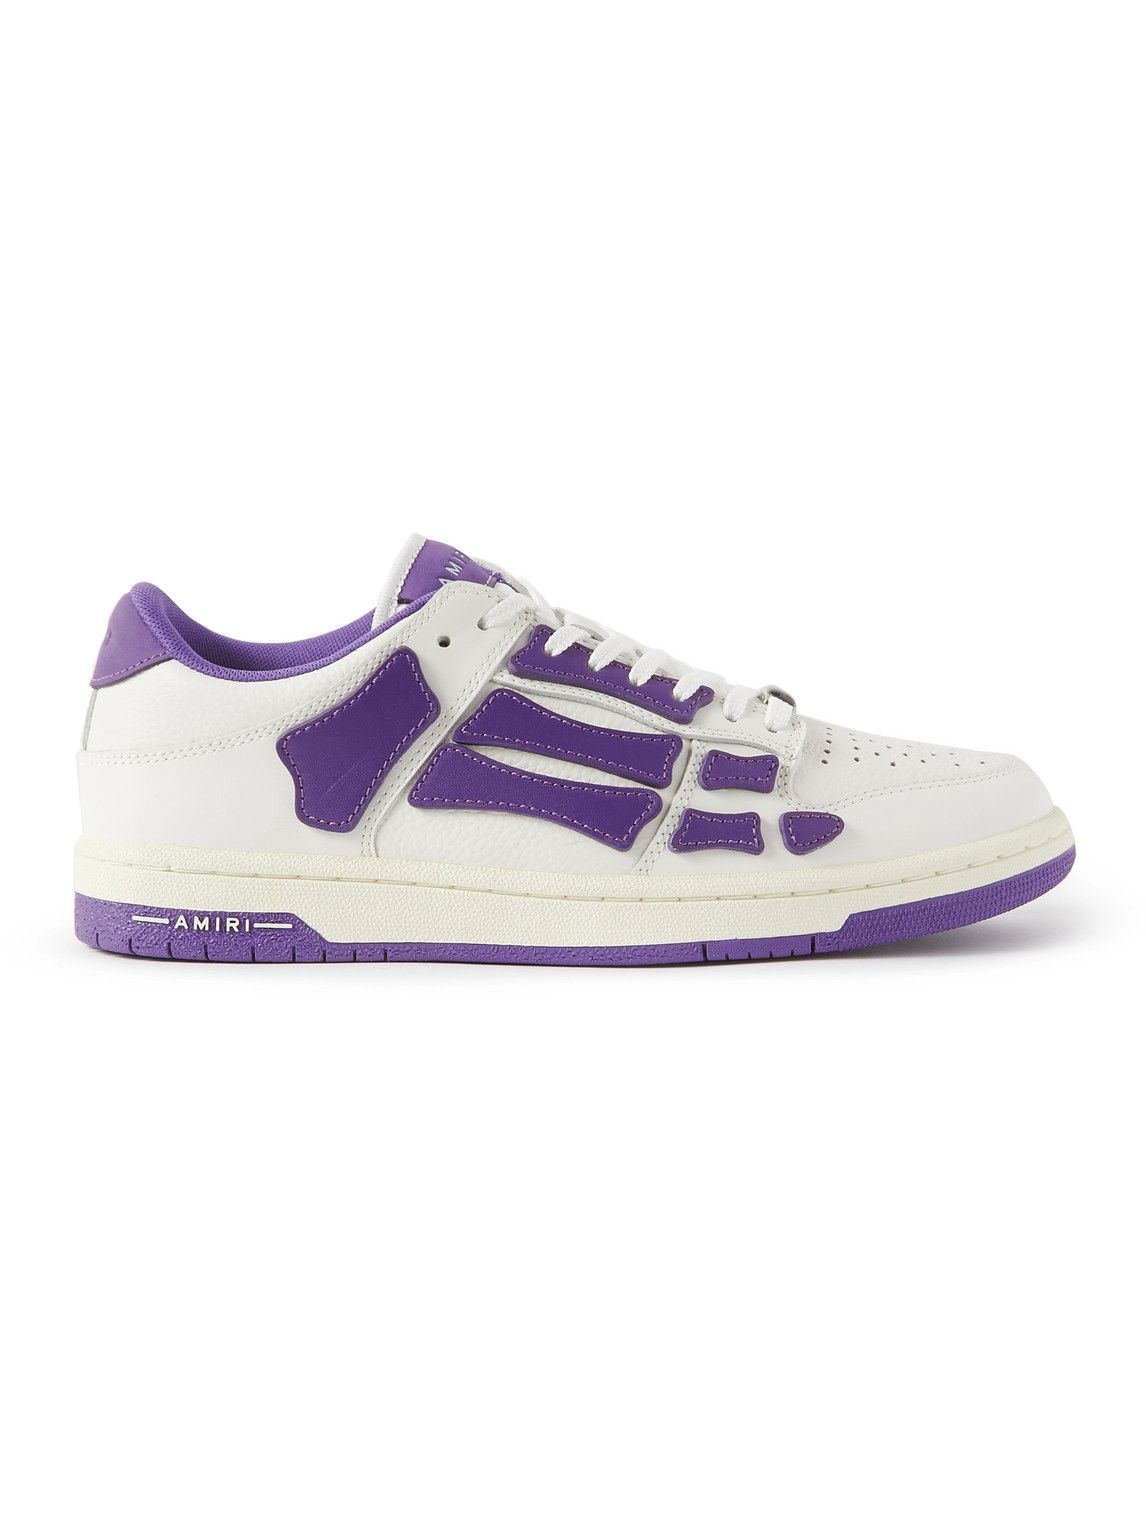 AMIRI - Skel-Top Colour-Block Leather Sneakers - Purple Amiri